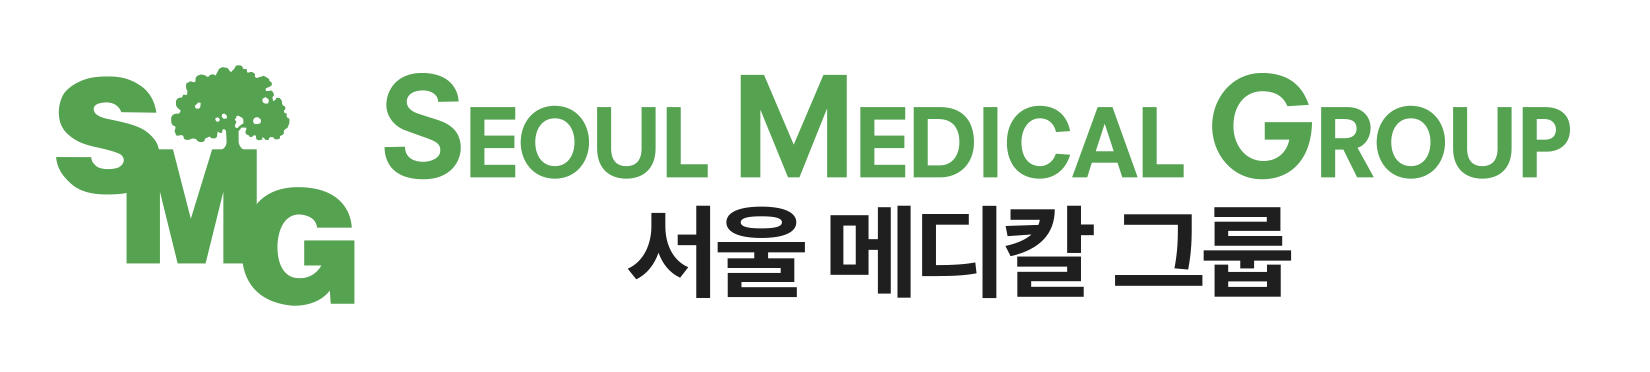 Seoul Medical Group logo